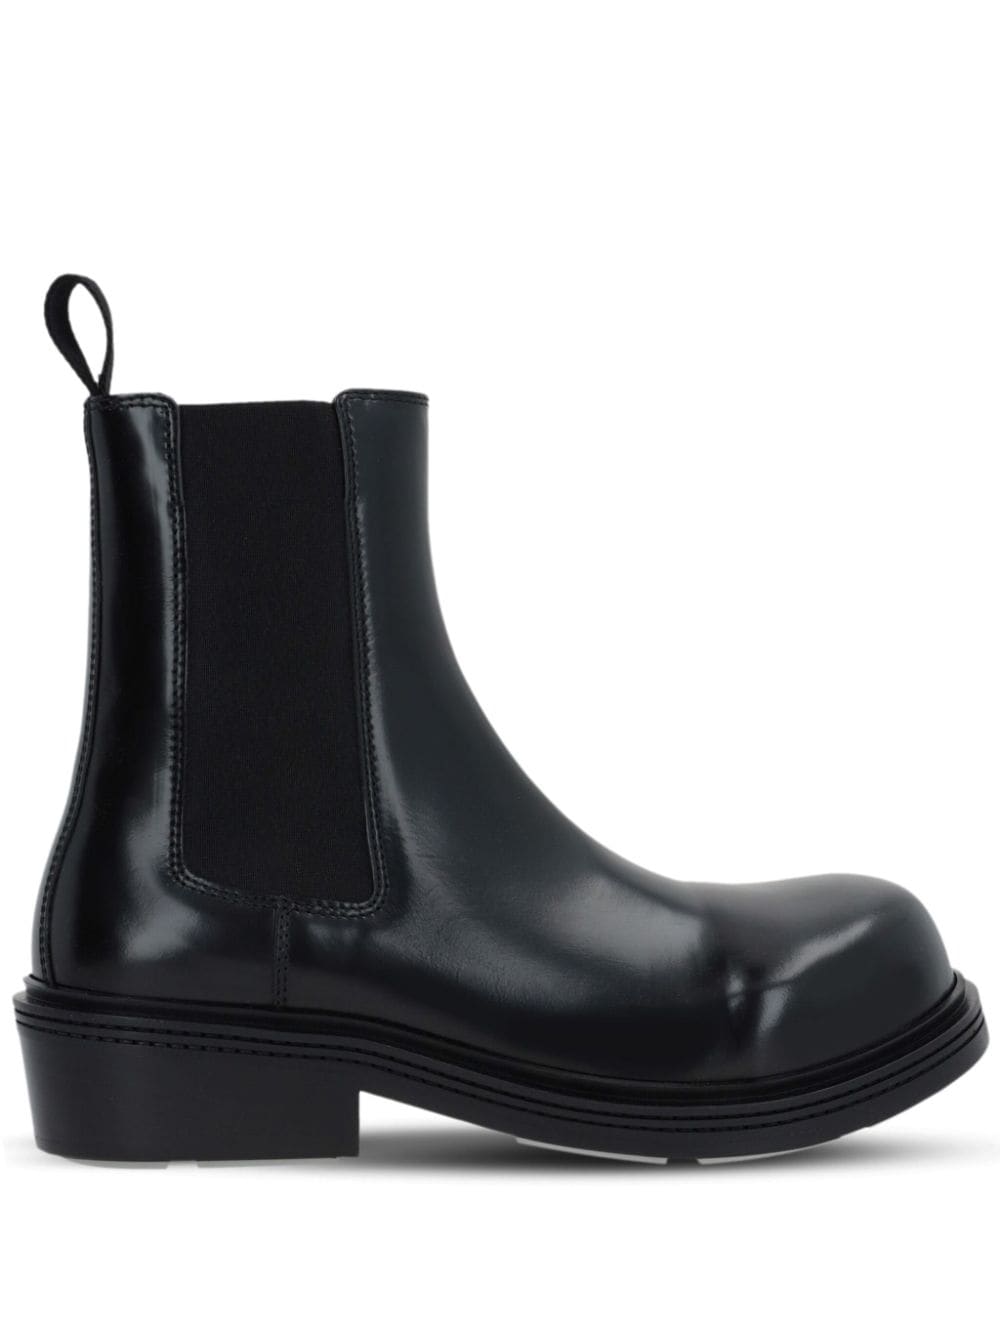 Image 1 of Bottega Veneta leather chelsea ankle boots